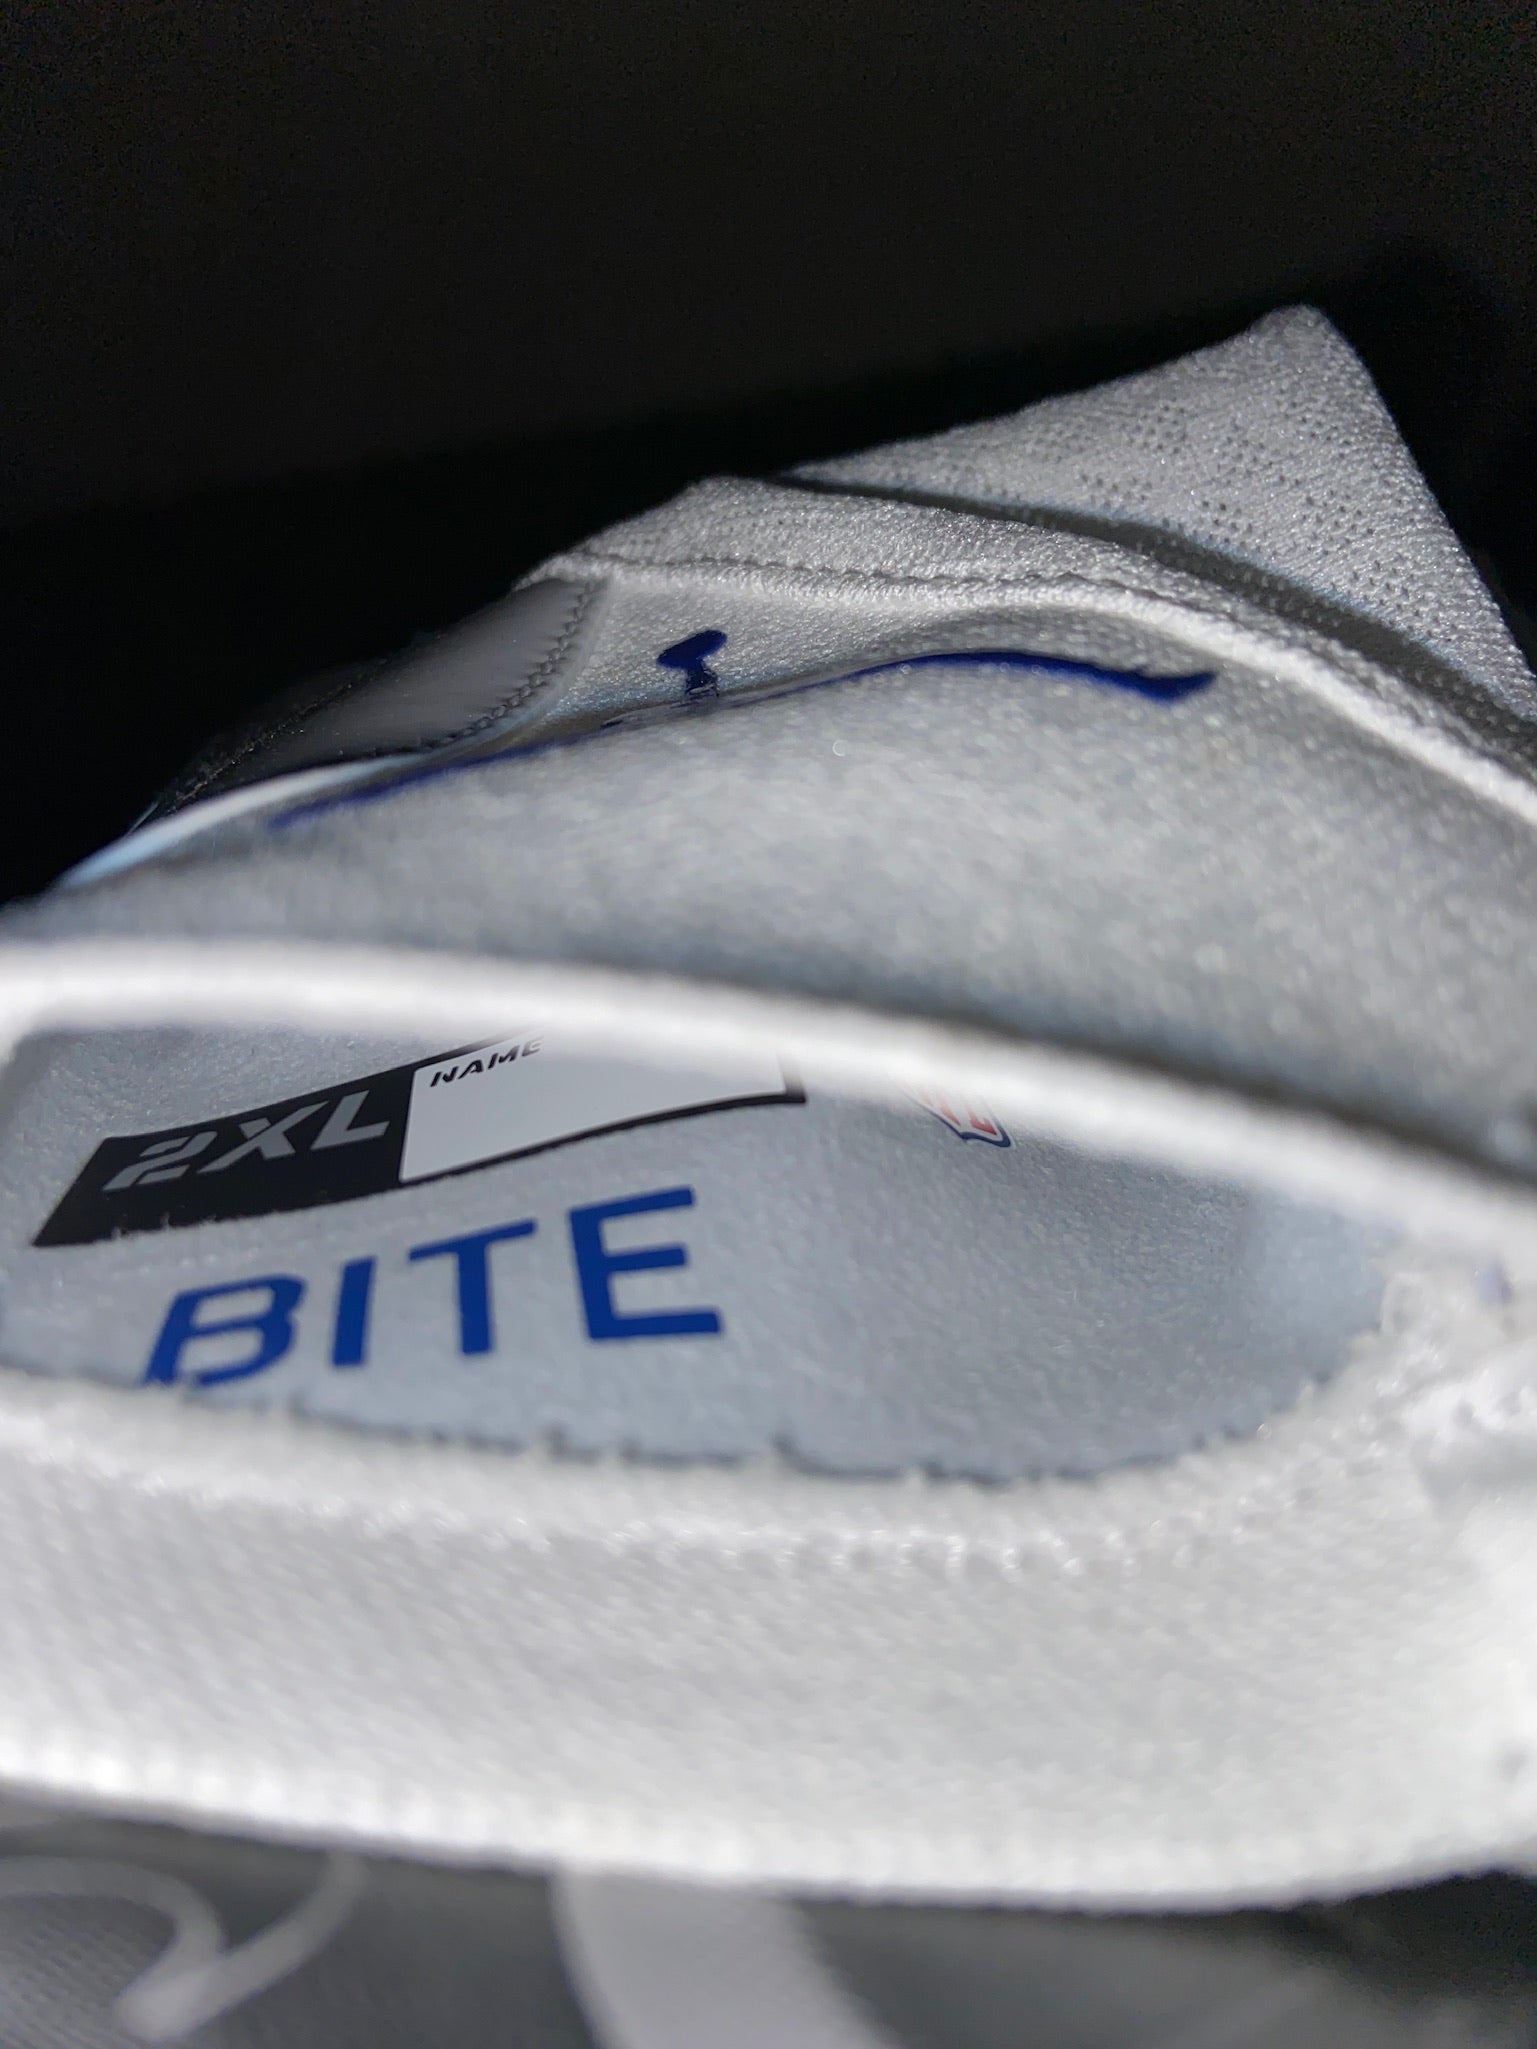 What Pros Wear: Jalen Ramsey's Nike Vapor Jet 7.0 Gloves - What Pros Wear